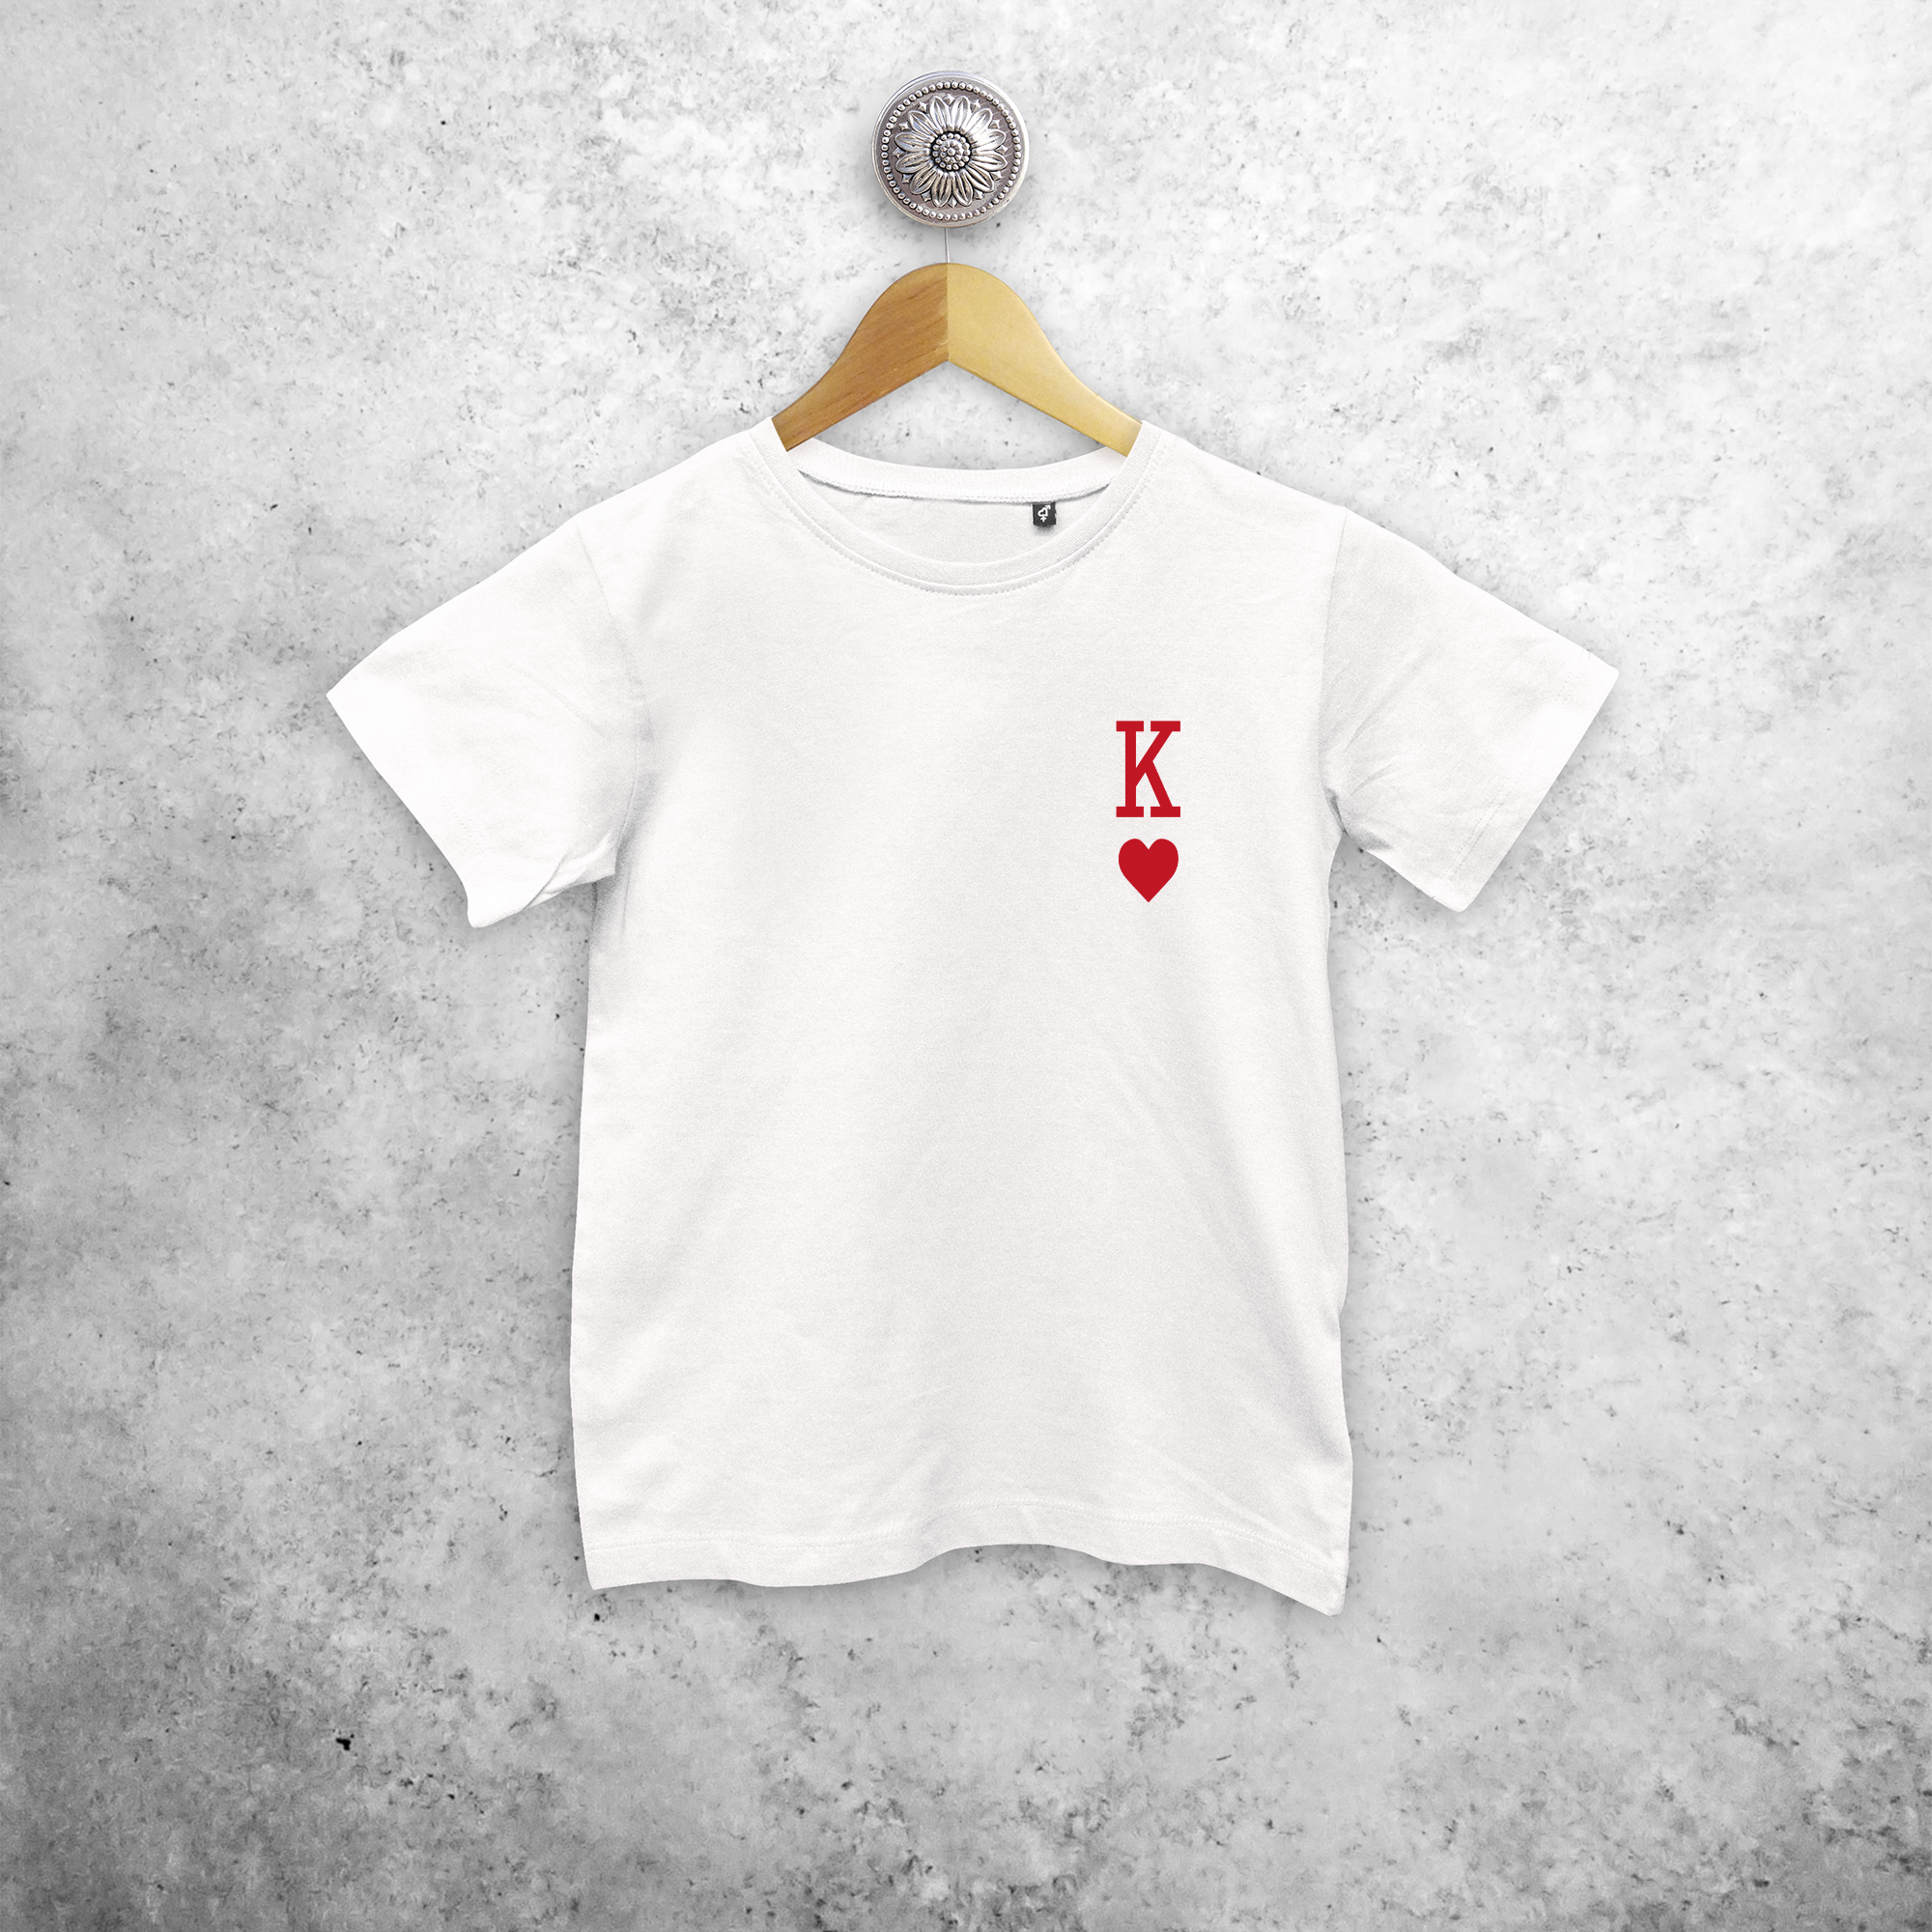 'King of hearts' kids shortsleeve shirt